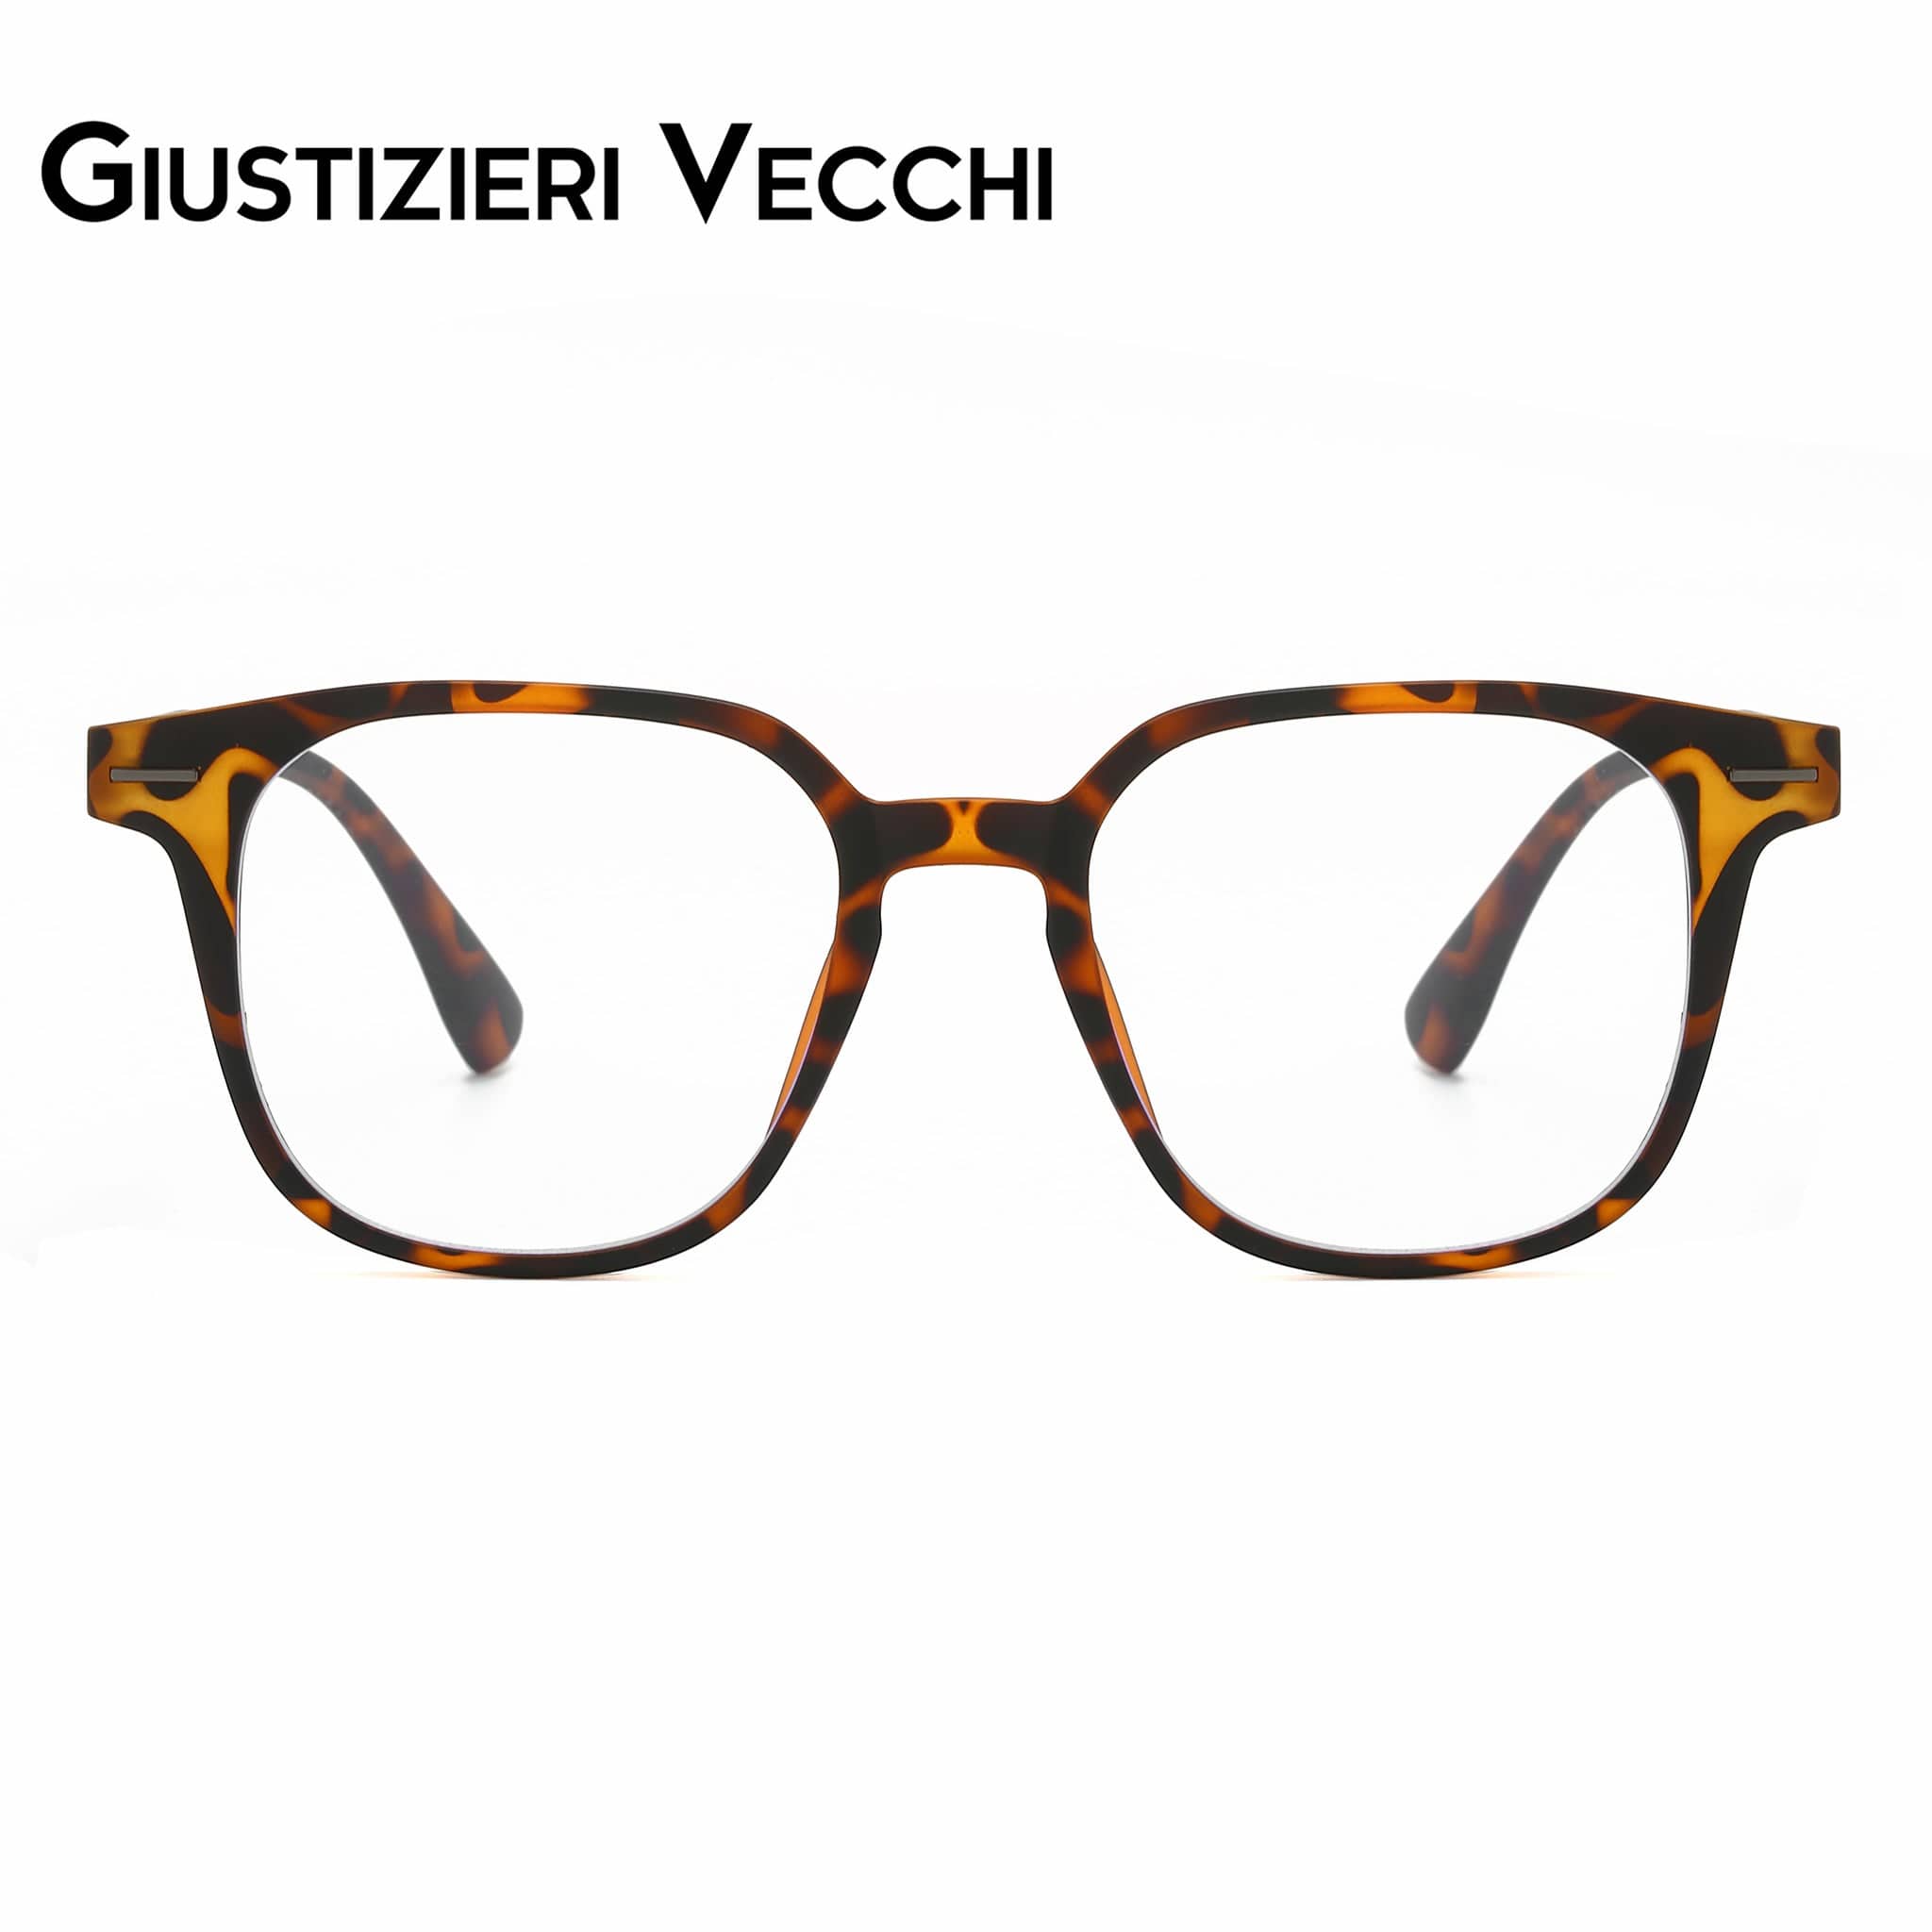 GIUSTIZIERI VECCHI Eyeglasses Small / Brown Tortoise IceWave Uno